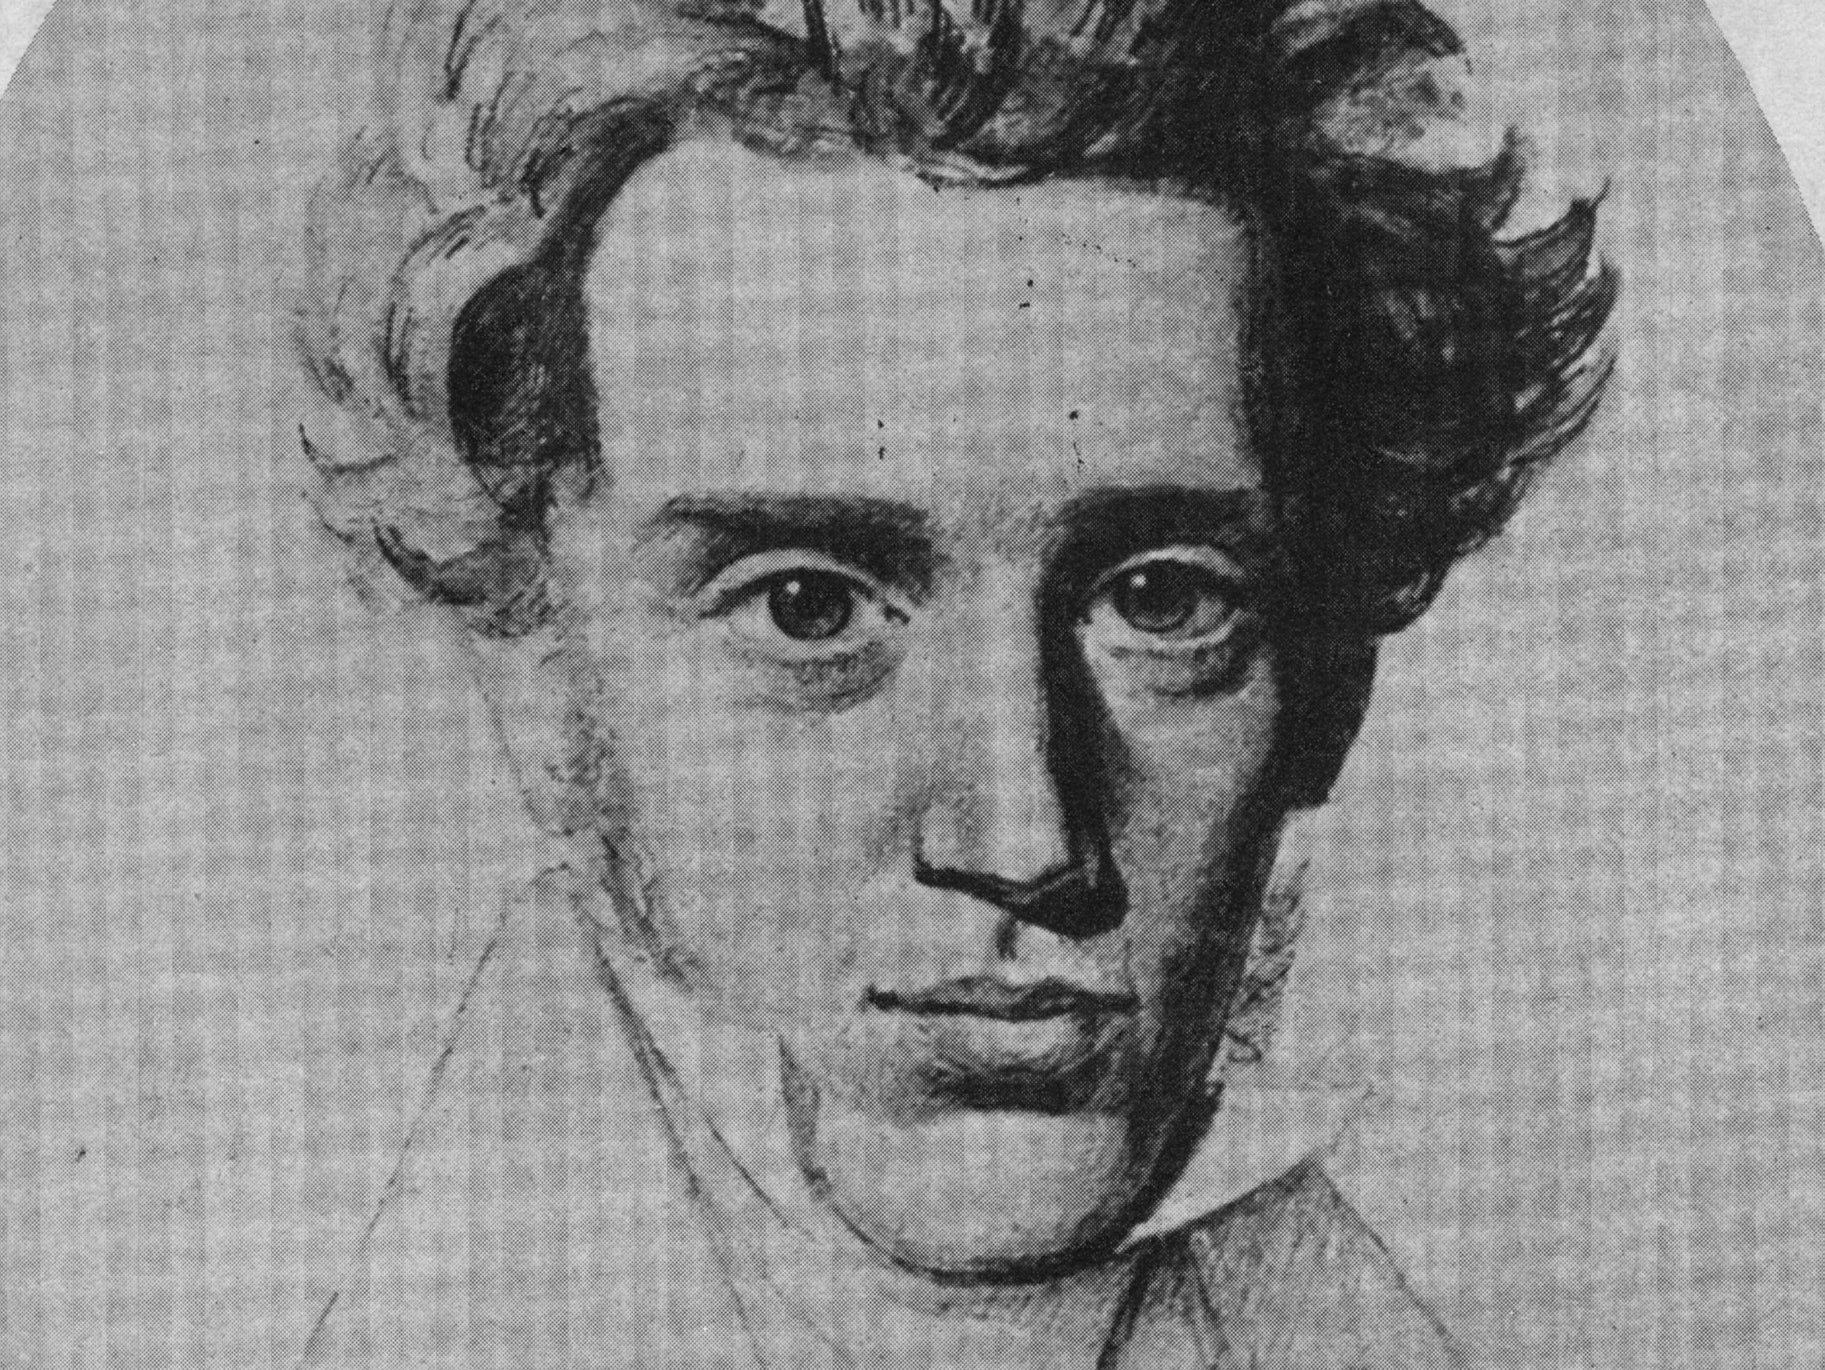 Great Dane: the 19th-century philosopher Soren Kierkegaard